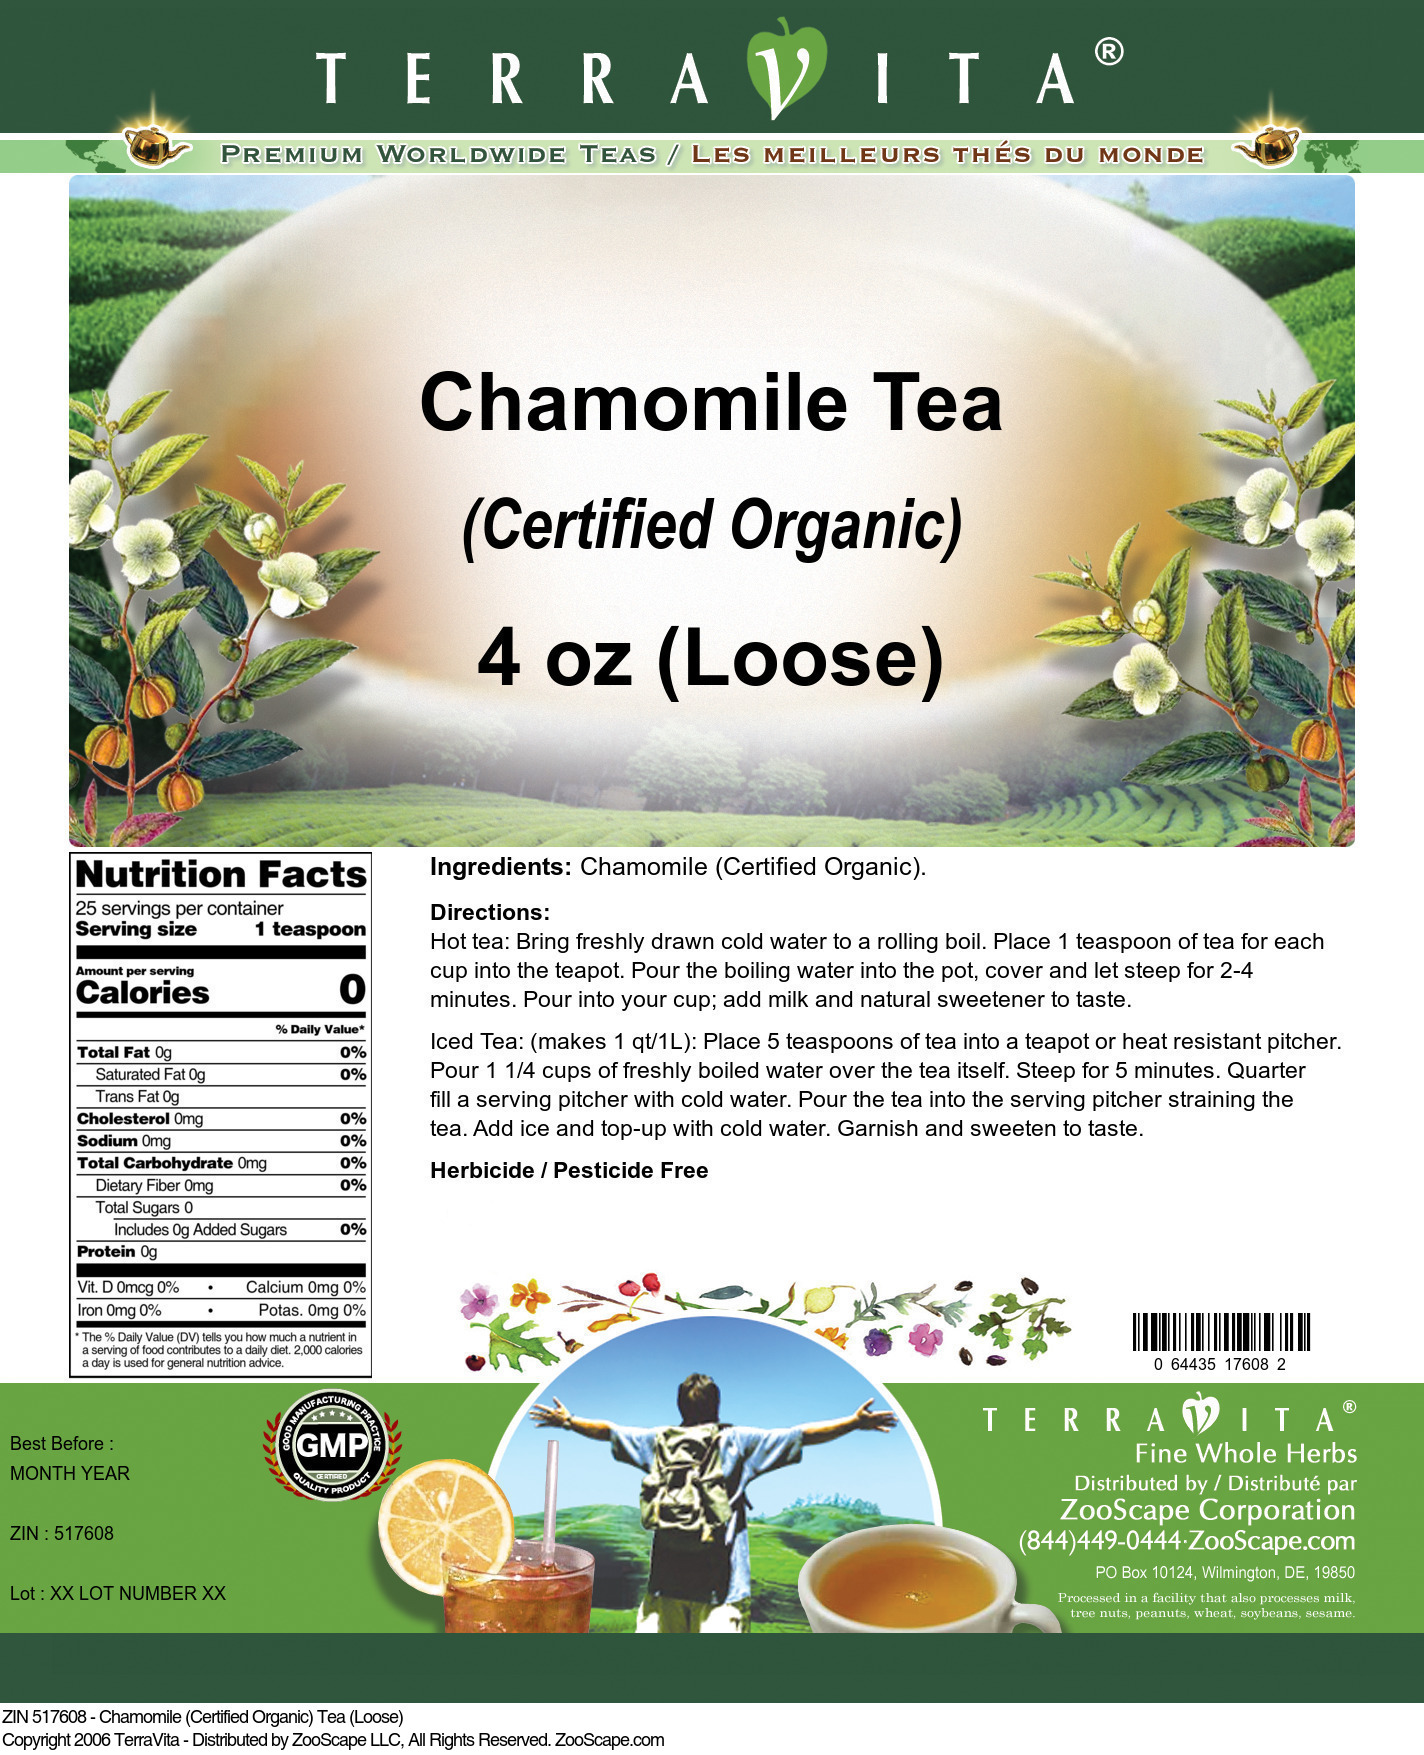 Chamomile (Certified Organic) Tea (Loose) - Label